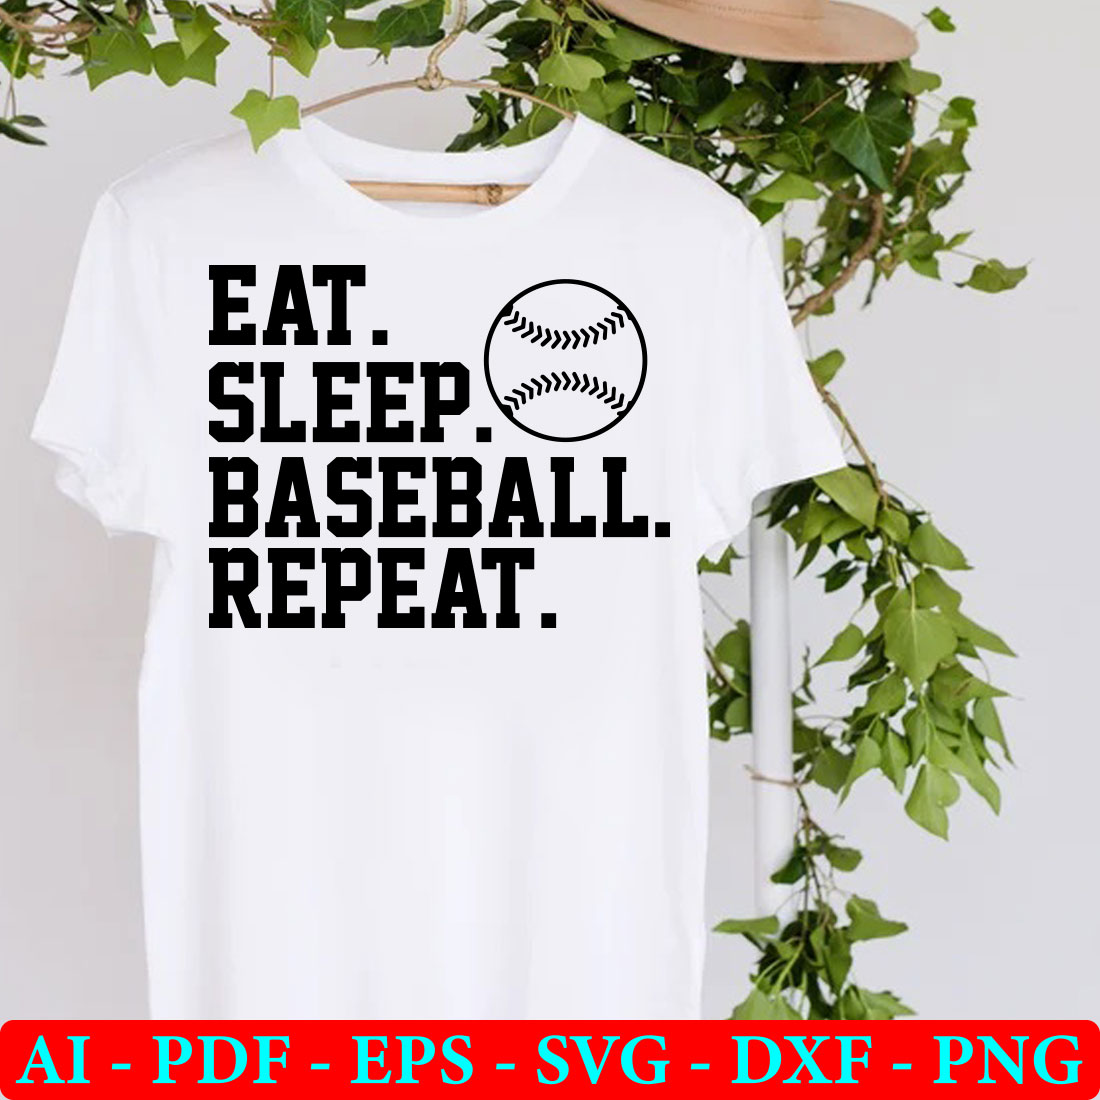 T - shirt that says eat sleep baseball repeat.